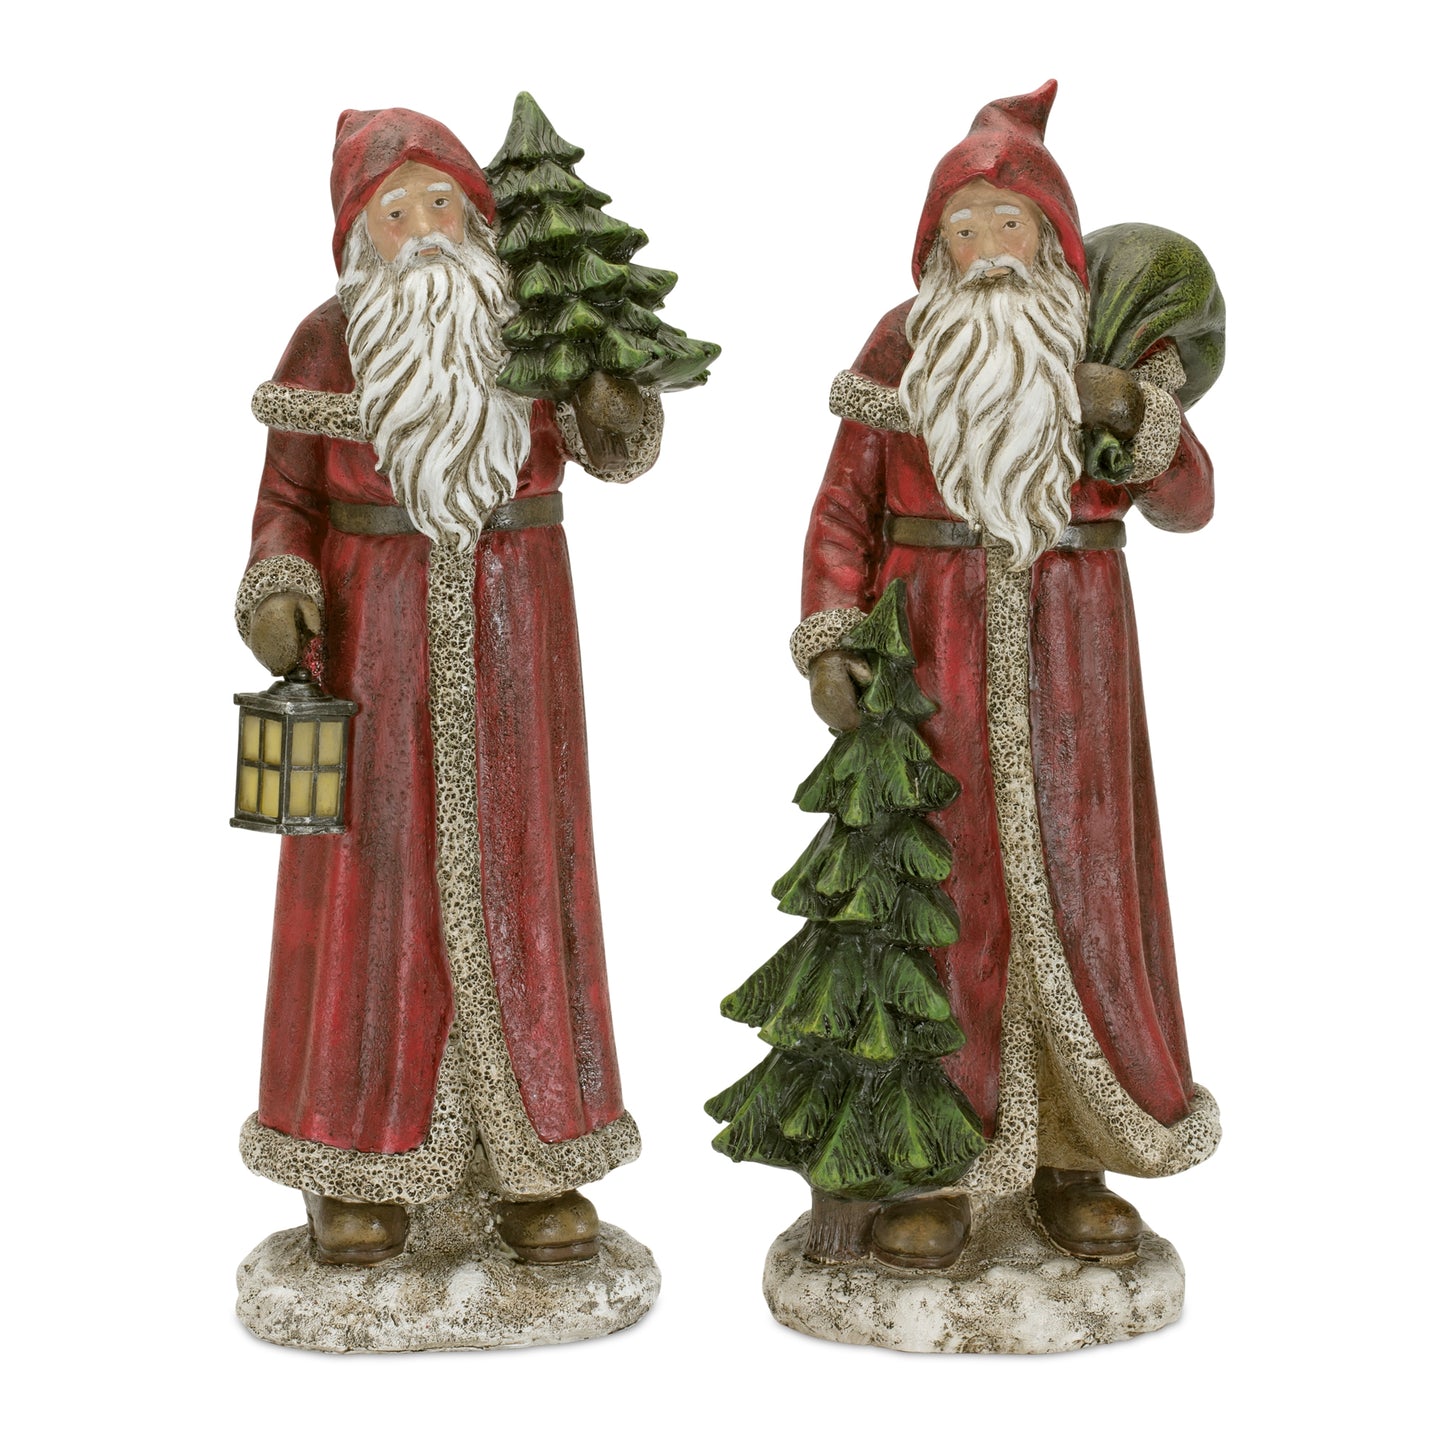 Rustic Stone Santa Figurine with Pine Tree and Lantern (Set of 2)